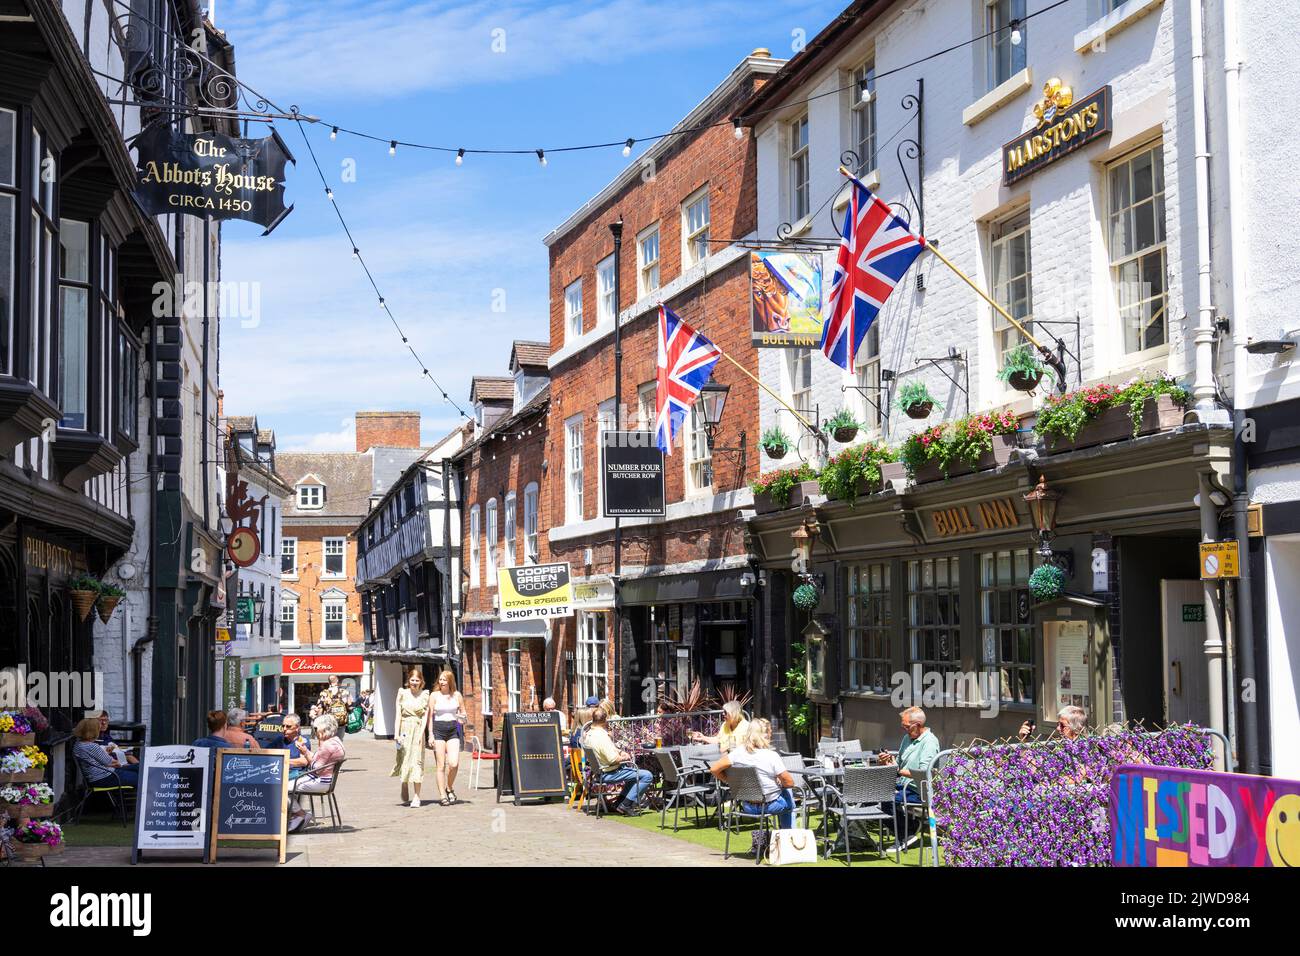 Shrewsbury town centre with Shops and restaurants on Butcher Row Shrewsbury Shropshire England UK GB Europe Stock Photo